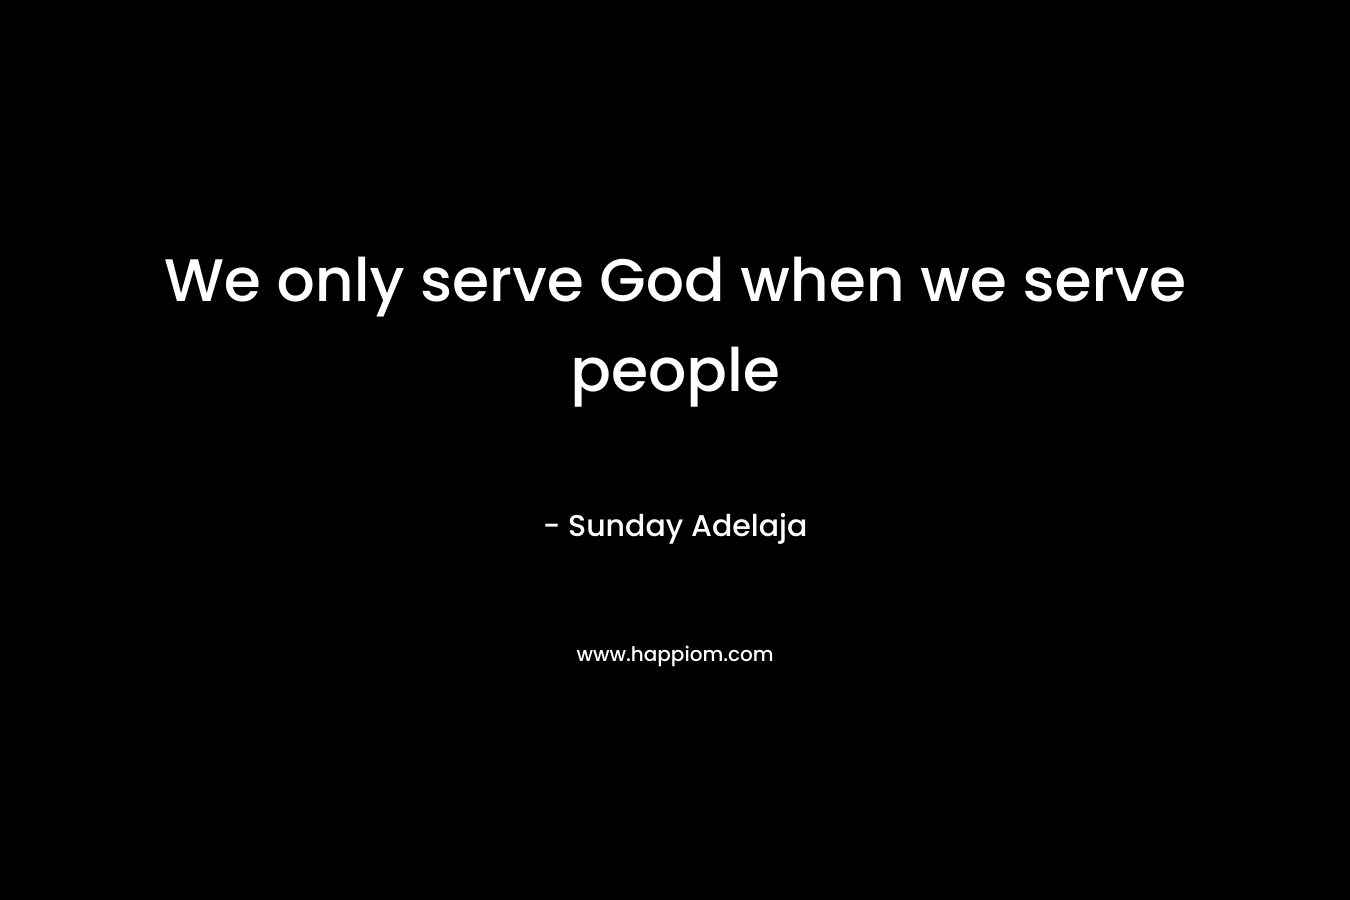 We only serve God when we serve people